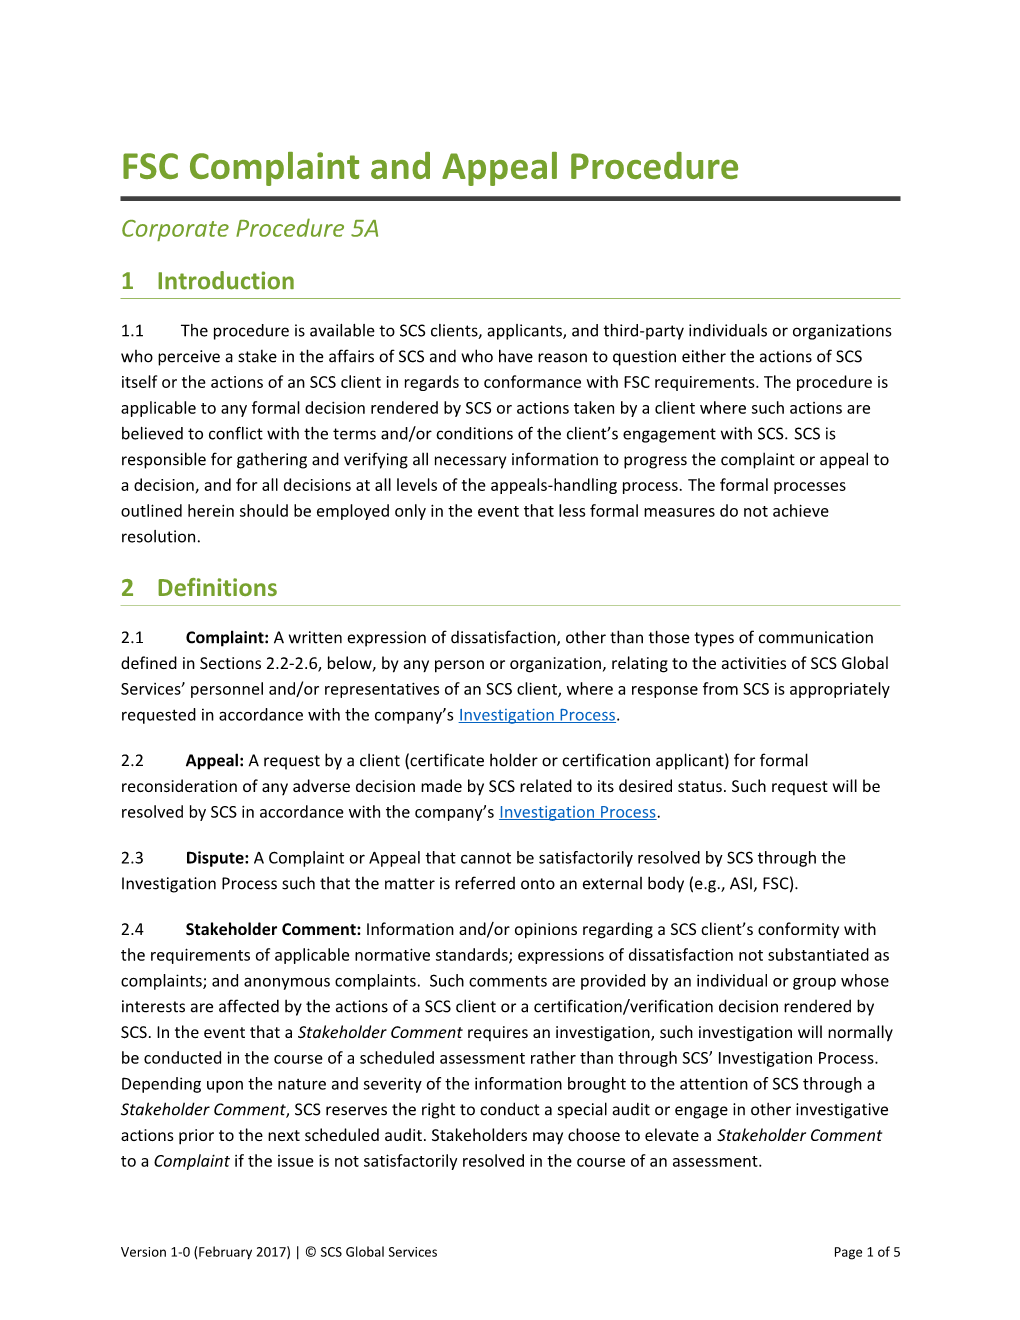 FSC Complaint Andappeal Procedure